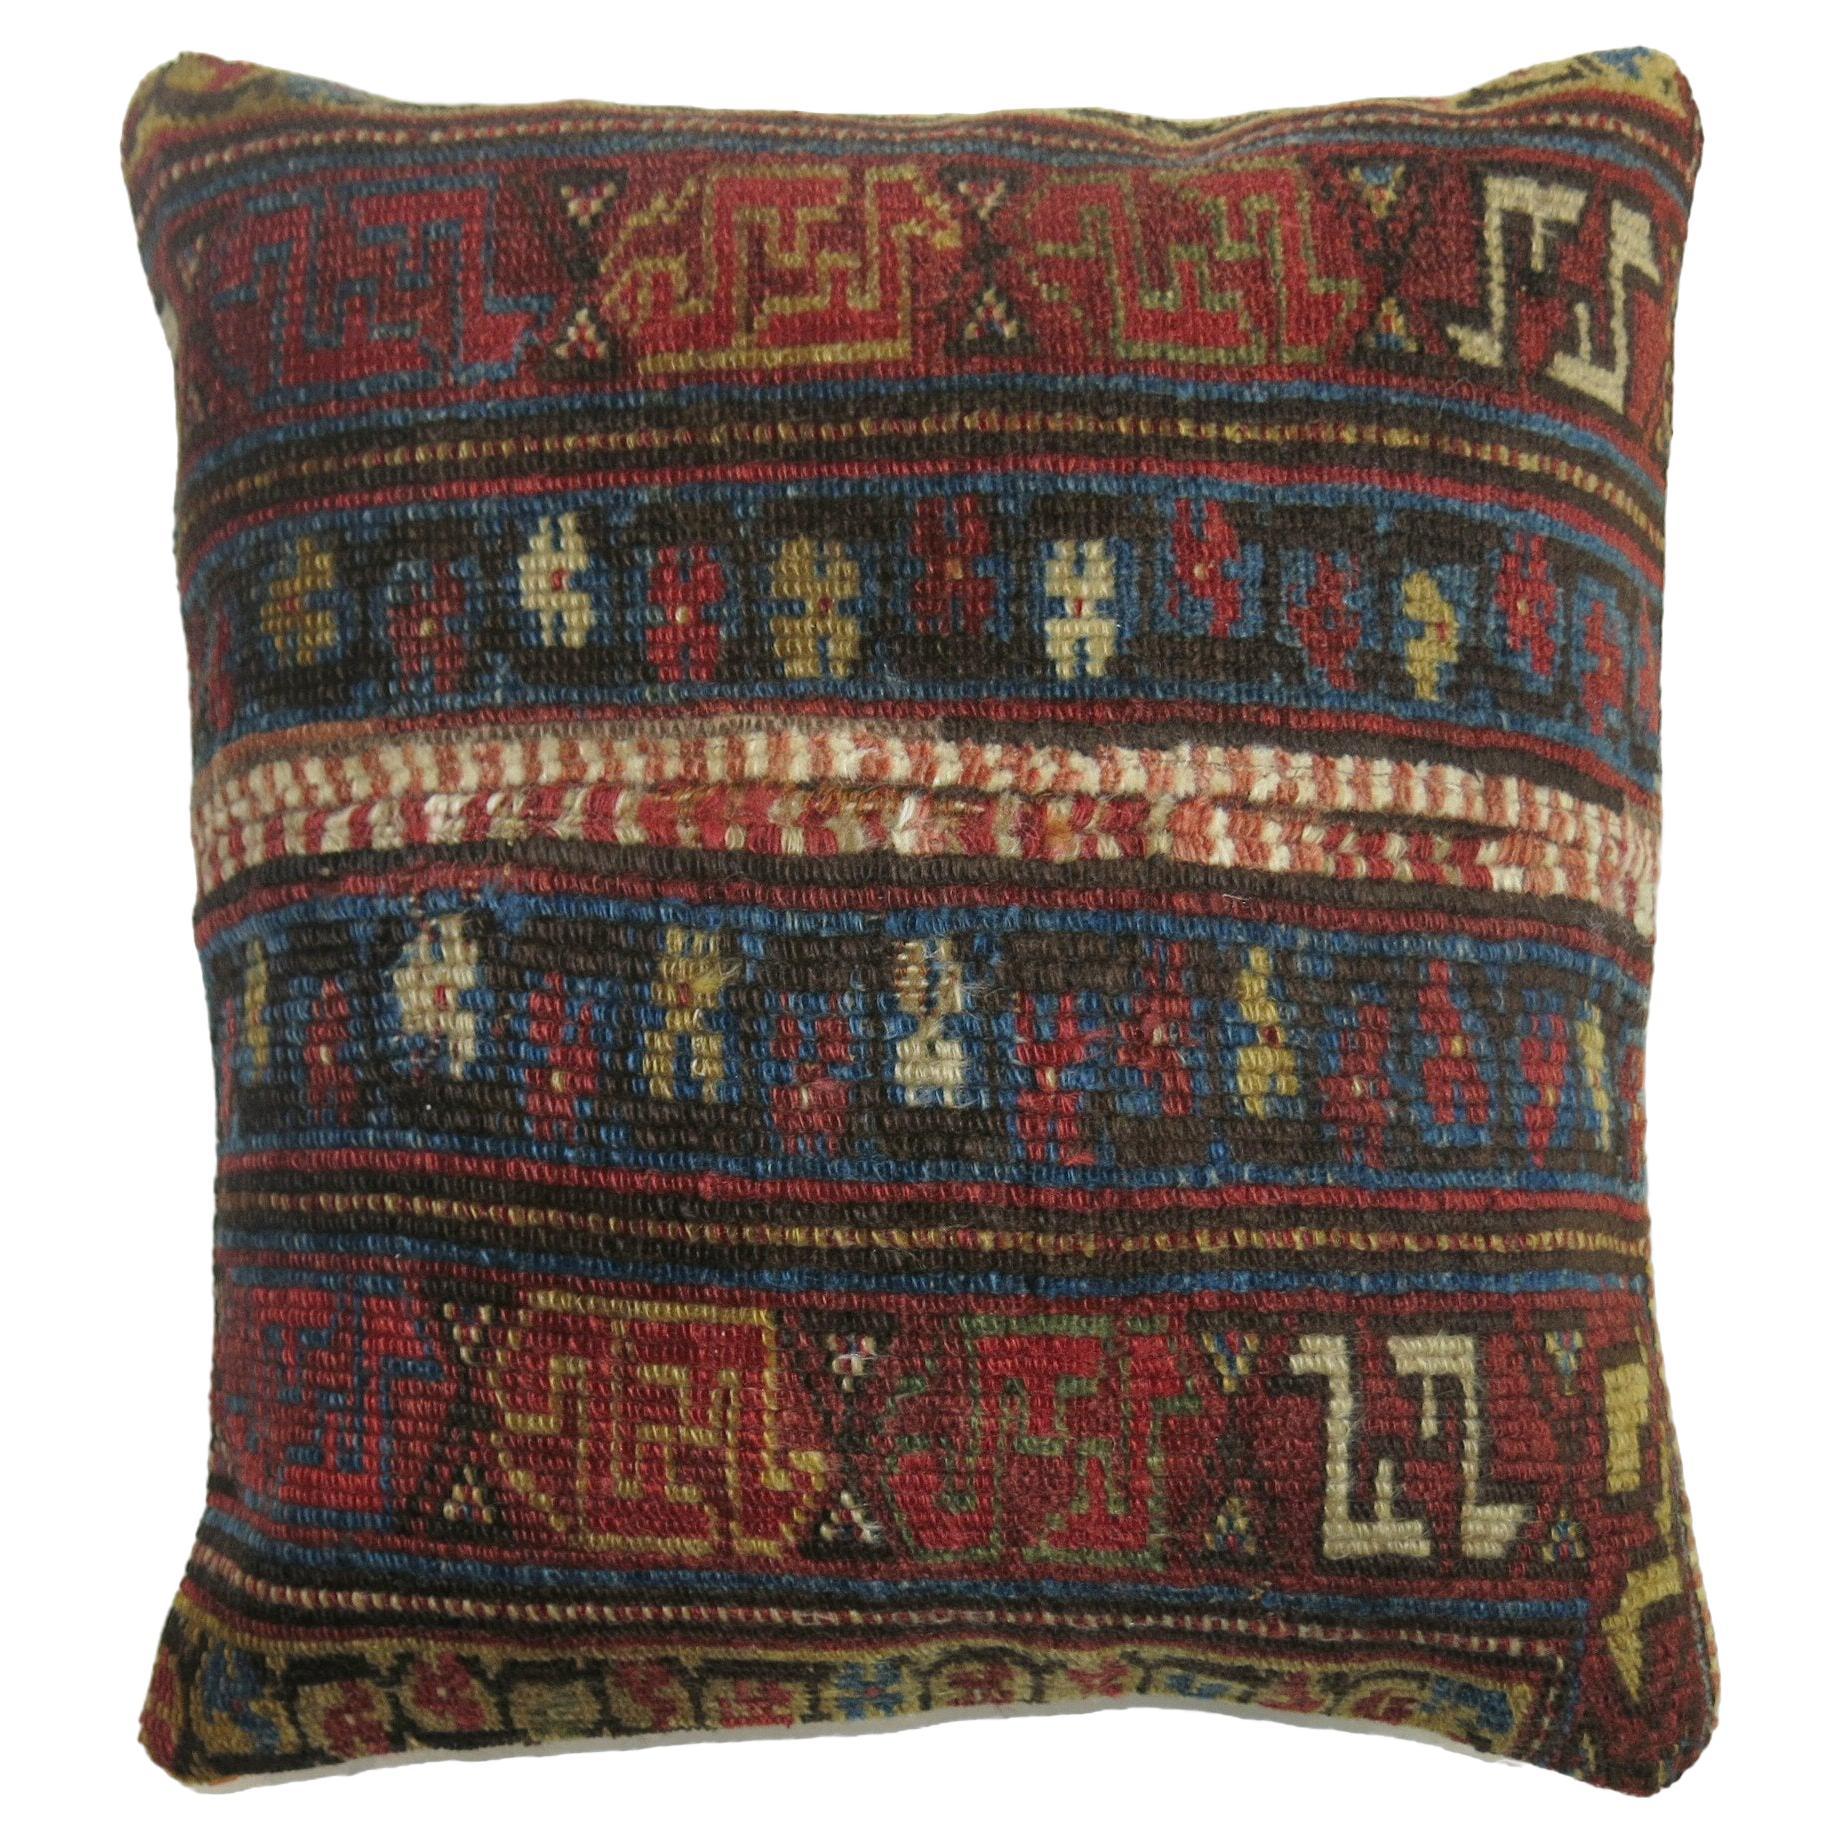 Zabihi Collection Persian Rug Pillow